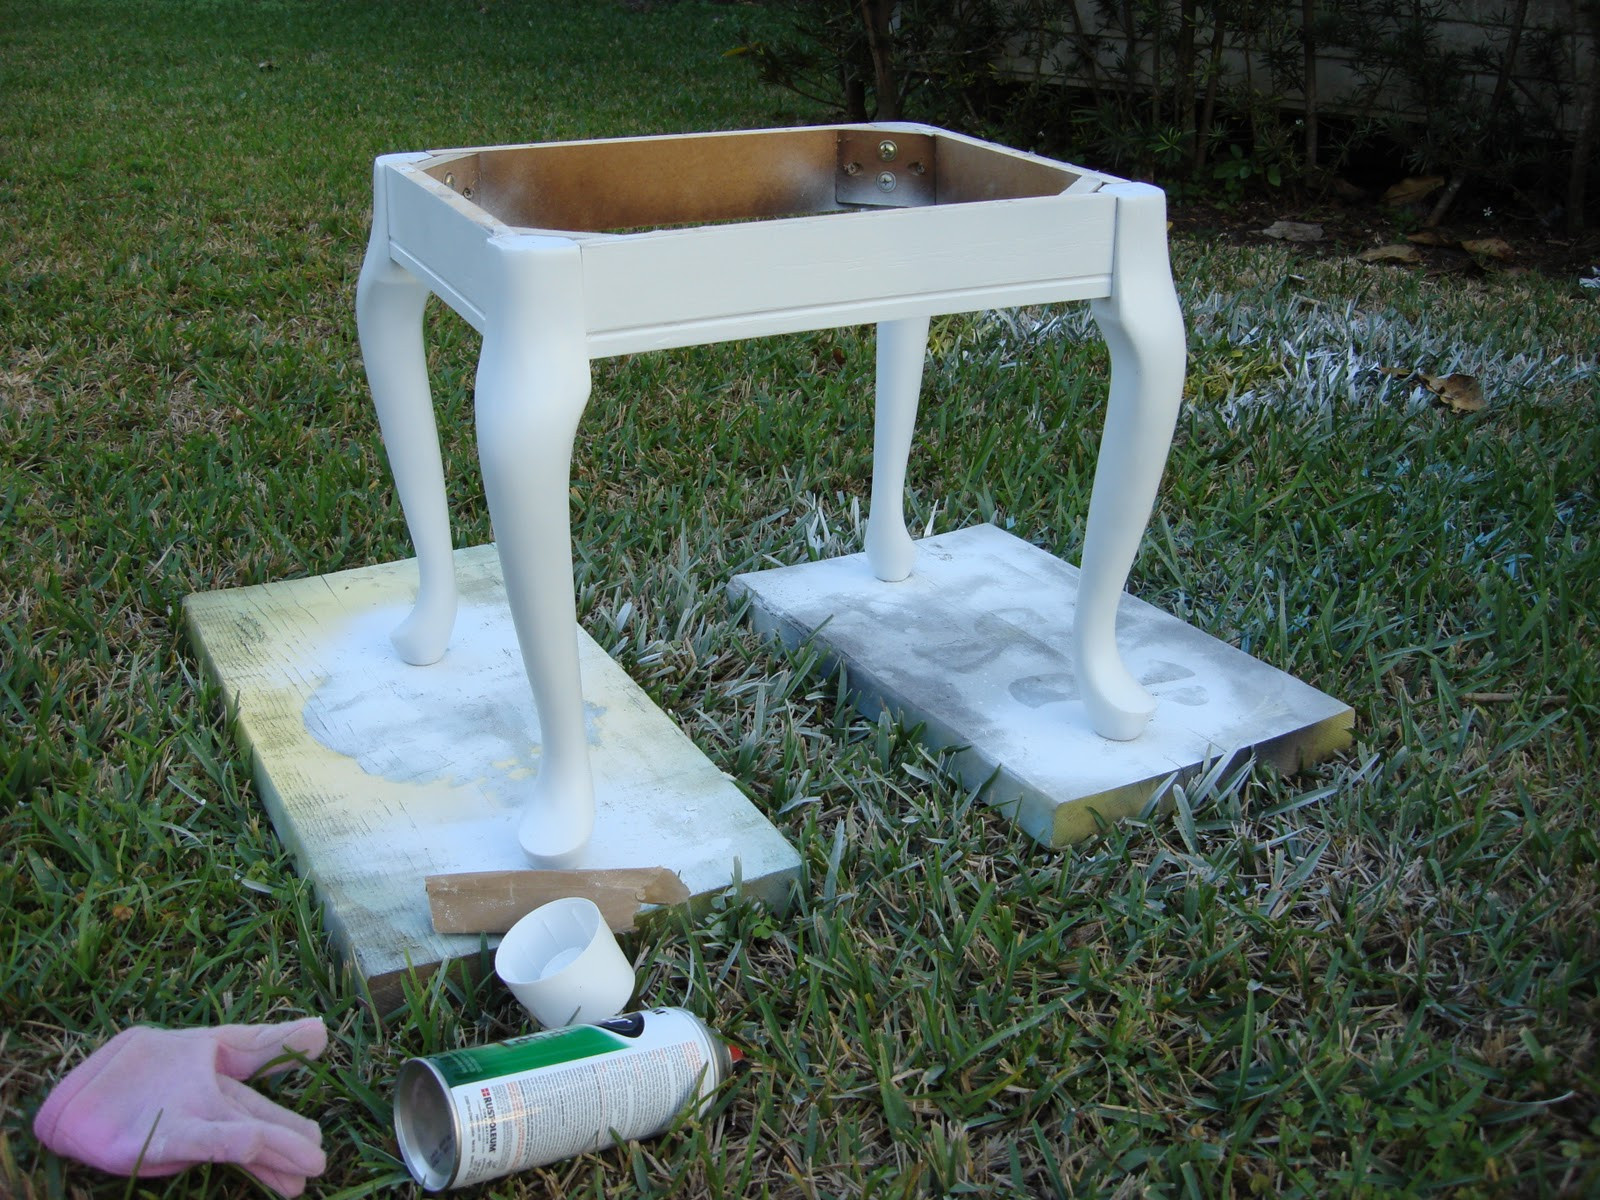 Best ideas about DIY Vanity Chair
. Save or Pin jandjhome DIY Vanity Stool Bench Now.